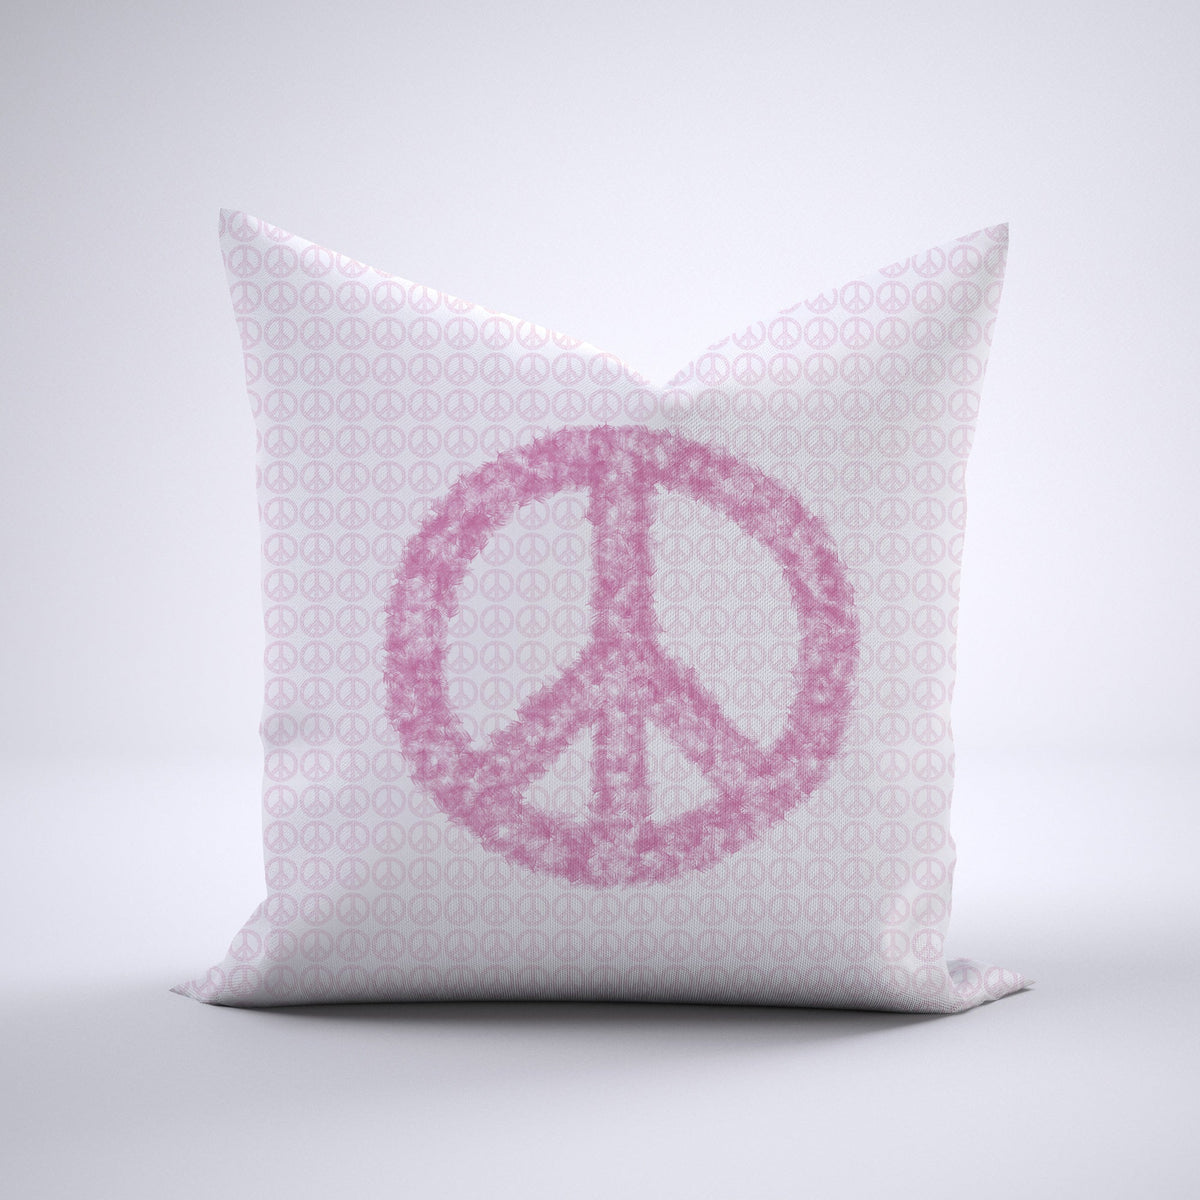 Throw Pillow - All-Over Peace Hot Pink Bedding, Pillows, Throw Pillows MWW 